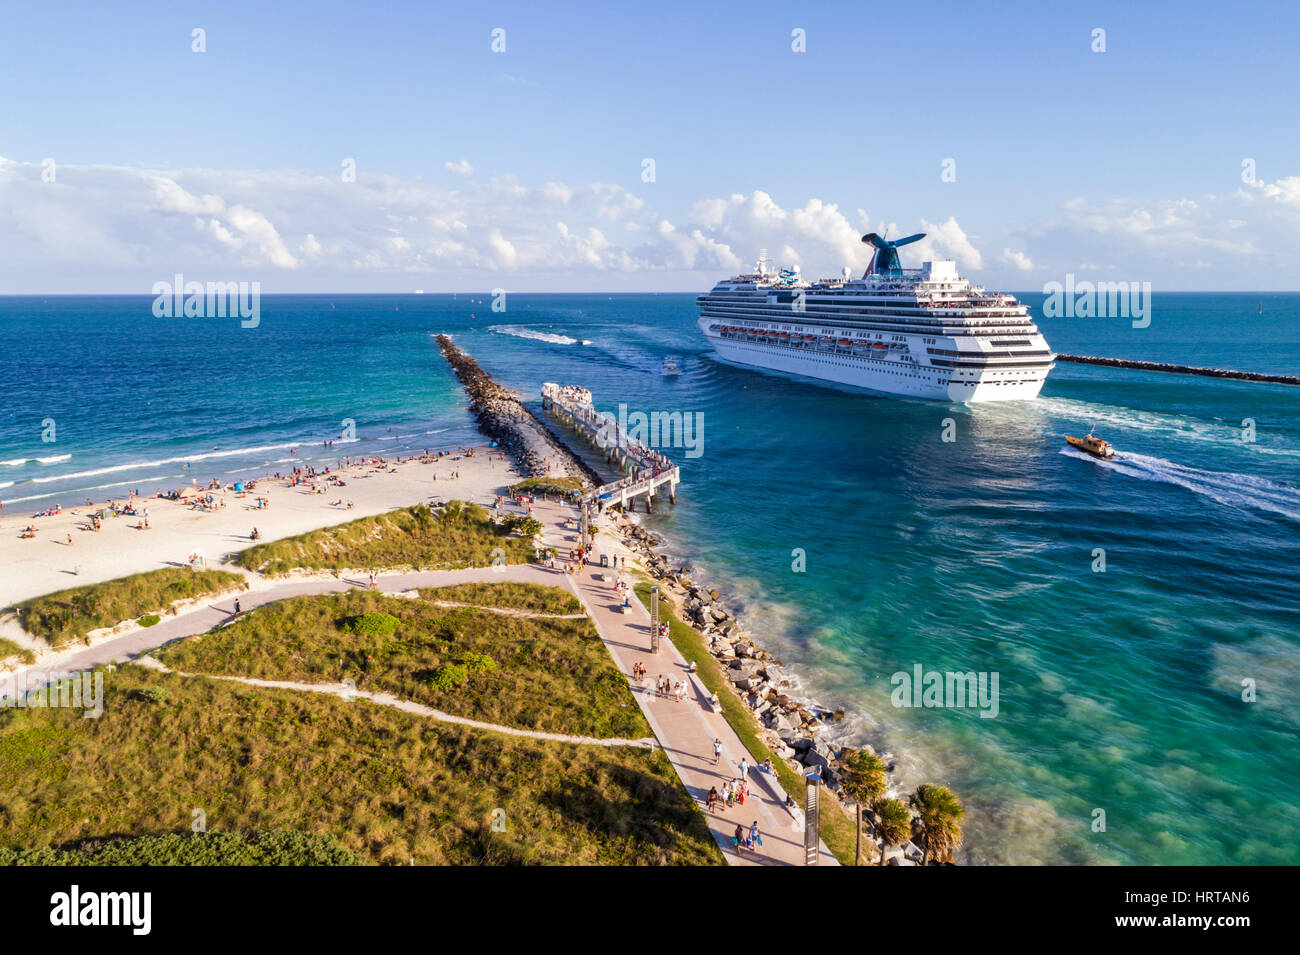 Miami Beach Florida, Atlantischer Ozean, Government Cut, South Pointe Park, Carnival Splendor Cruise Ship, Abfahrt von Port Miami, Luftaufnahme von oben Stockfoto